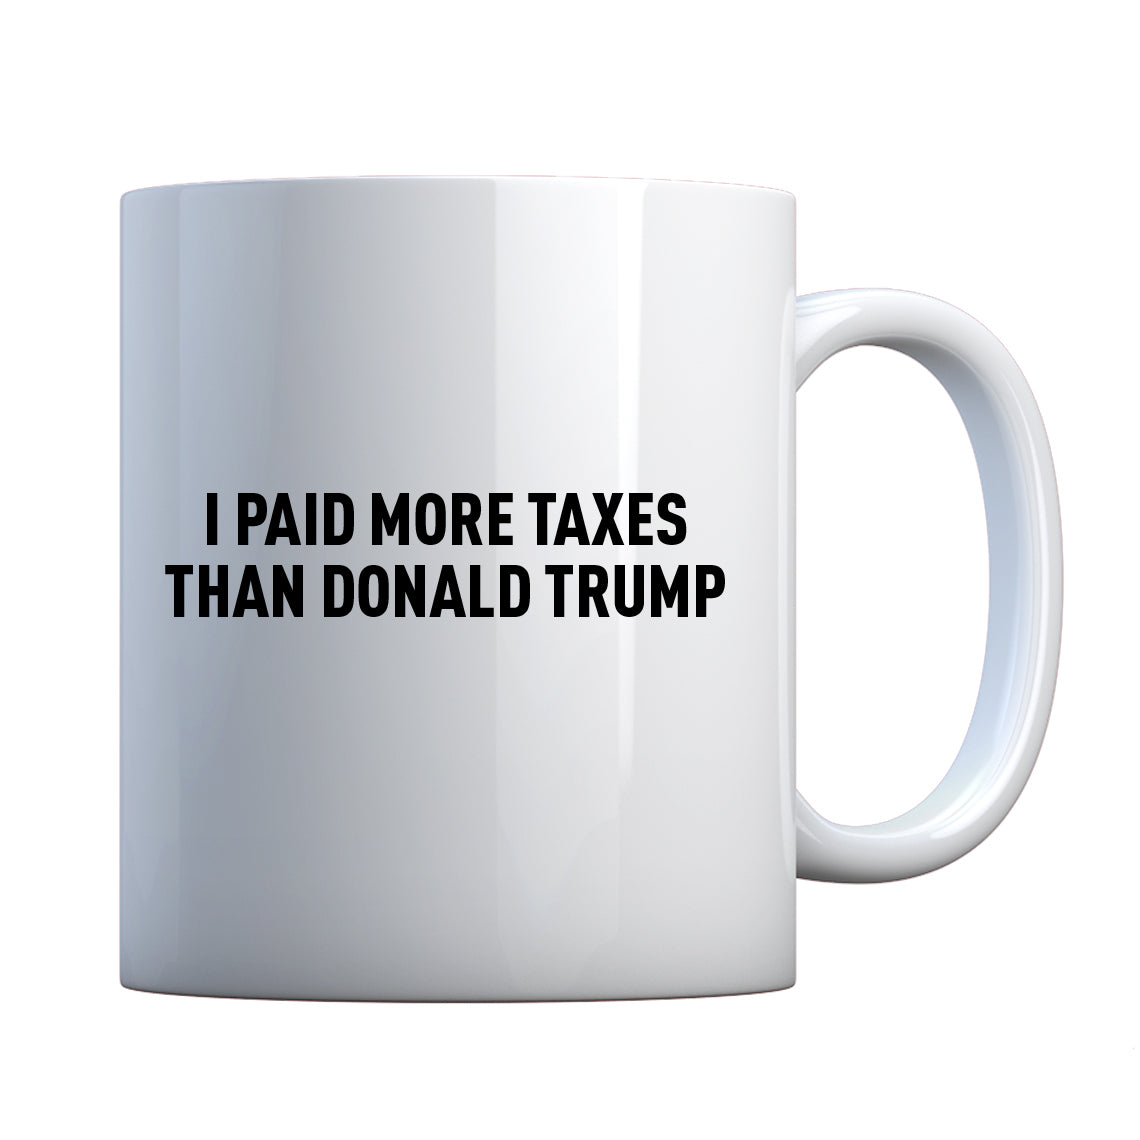 I PAID MORE TAXES THAN DONALD TRUMP Ceramic Gift Mug